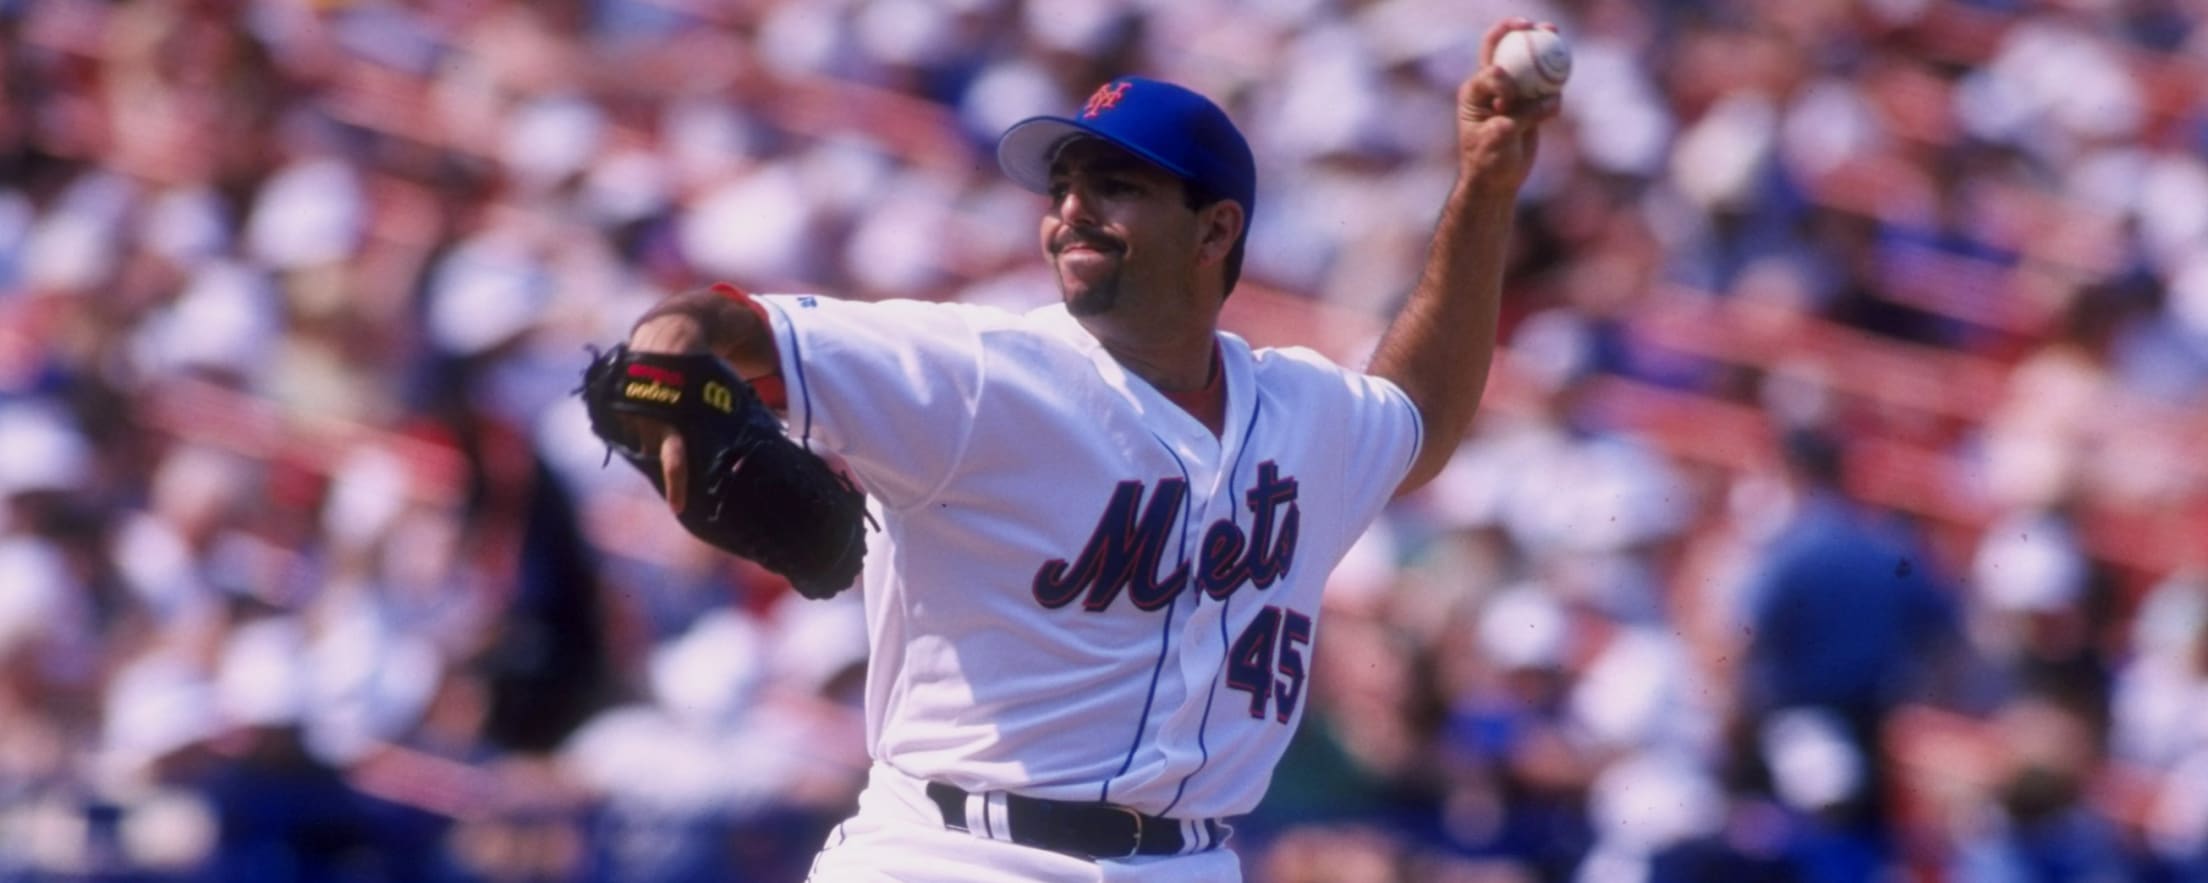 Todd Pratt New York Mets Jersey - Mets History